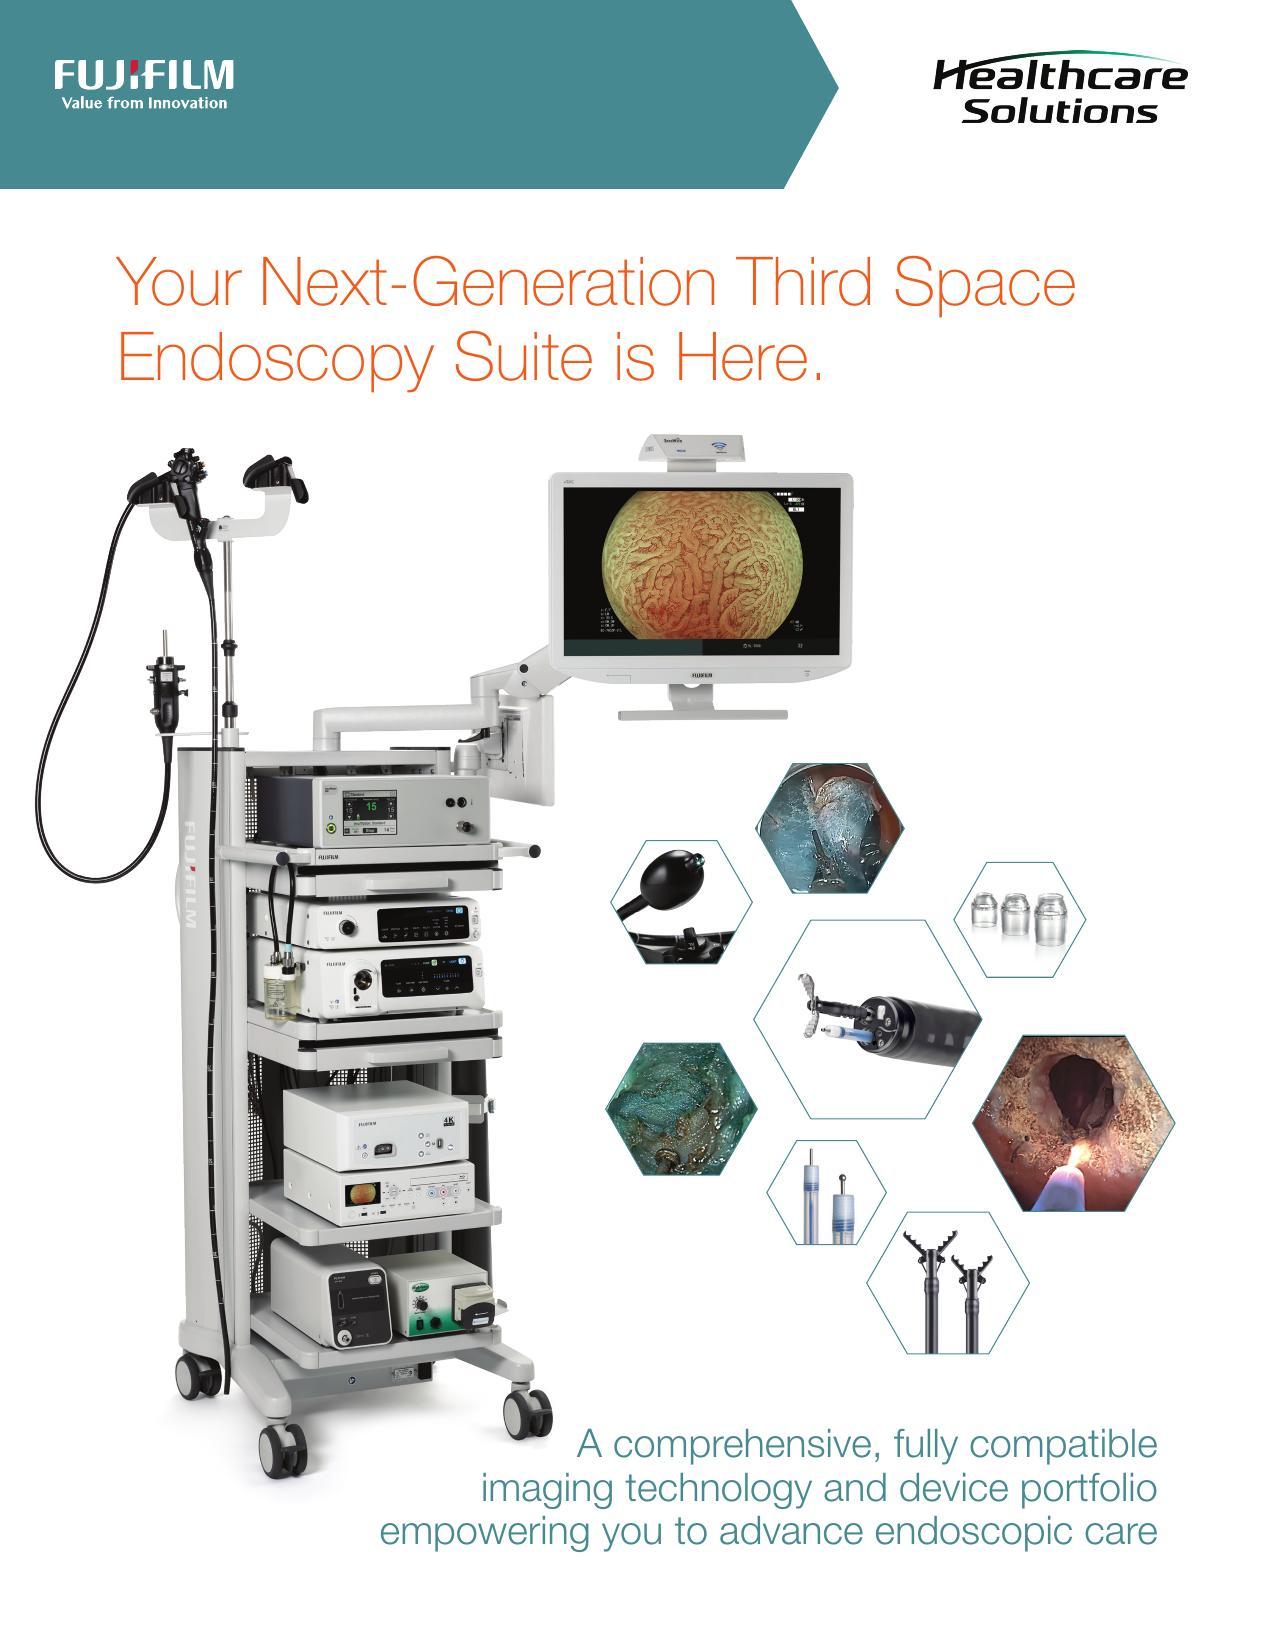 fujifilm-eluxeo-endoscopic-imaging-system-and-700-series-endoscopes-user-manual.pdf